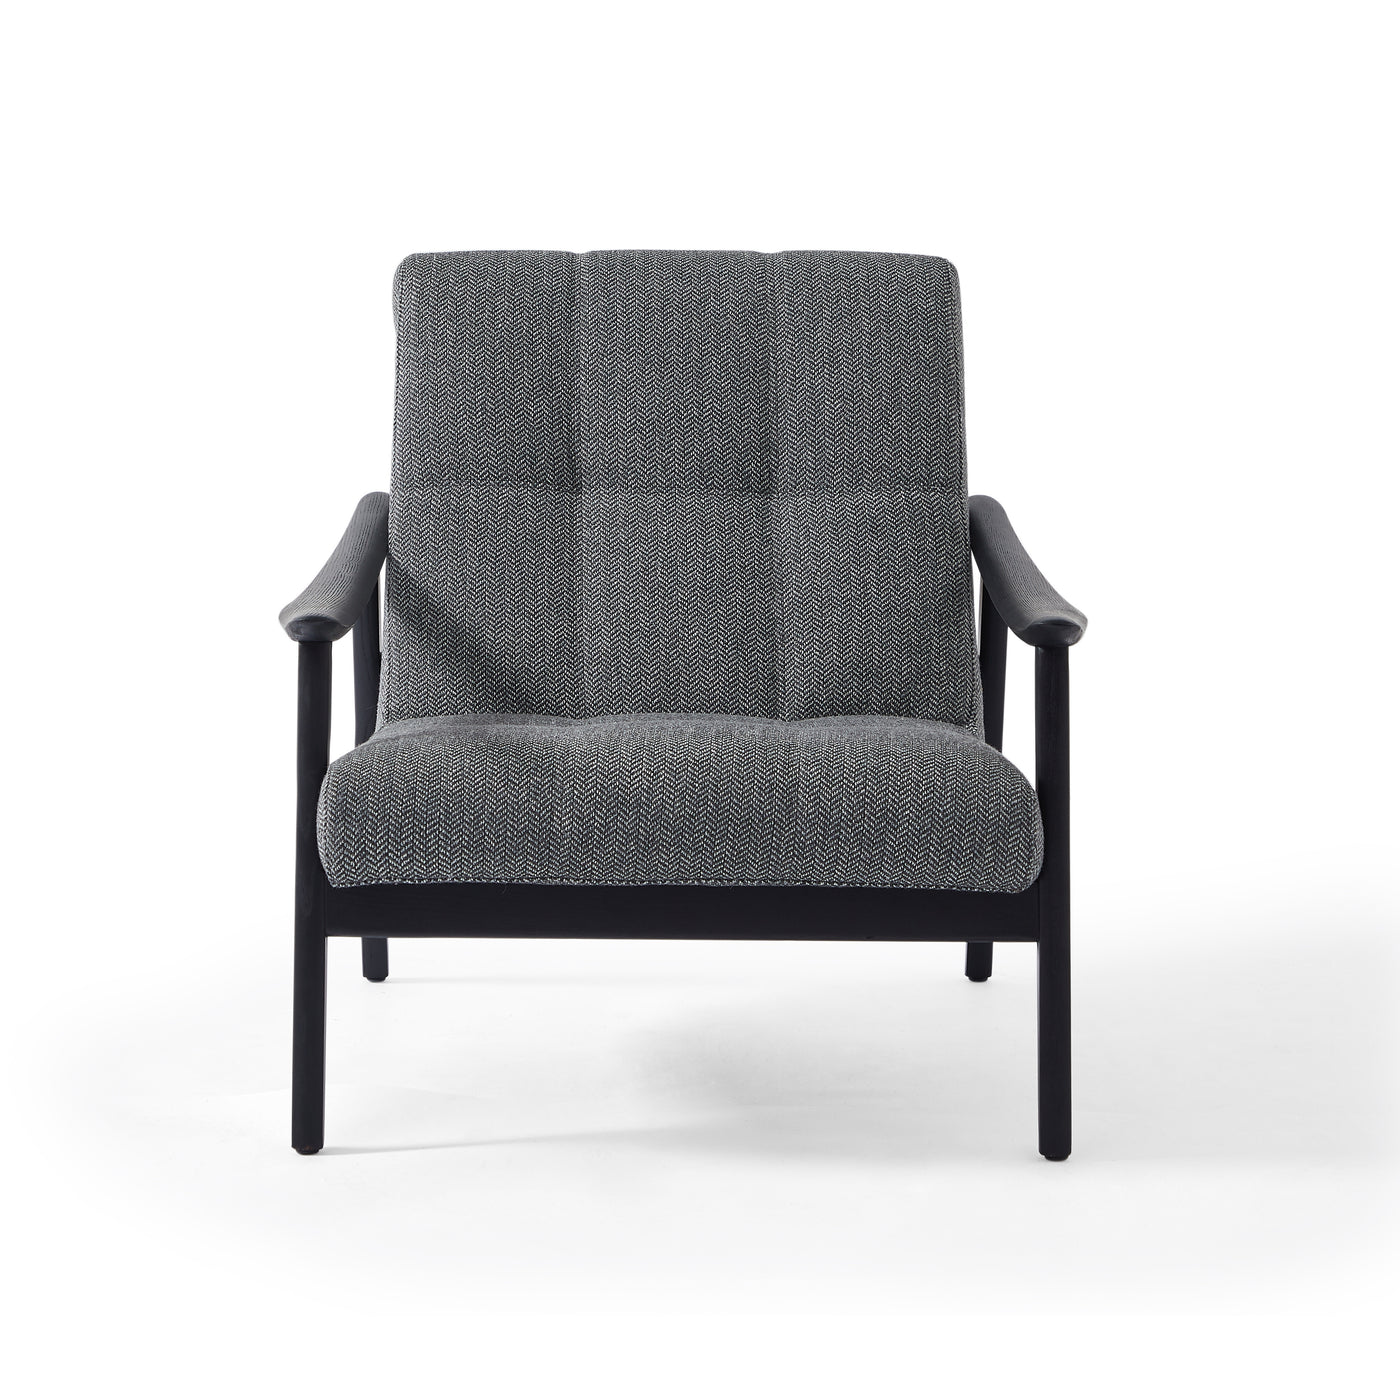 M1 lounge chair